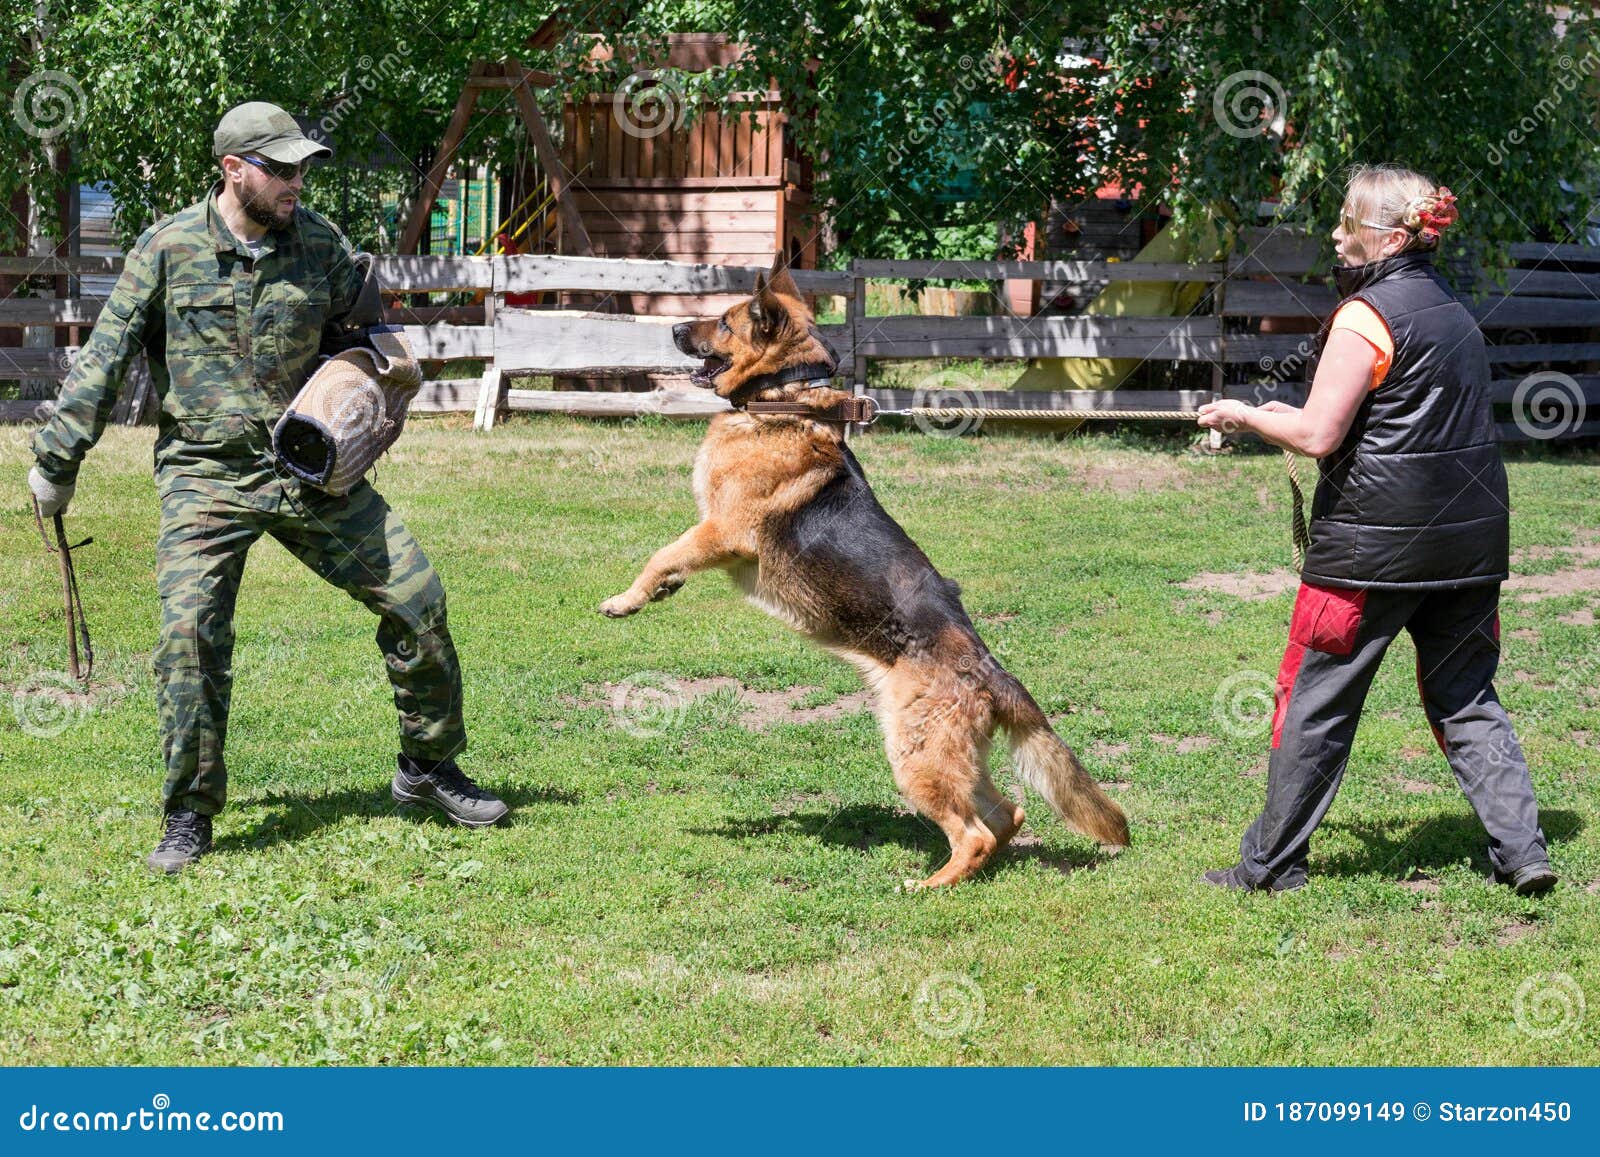 gsd dog training